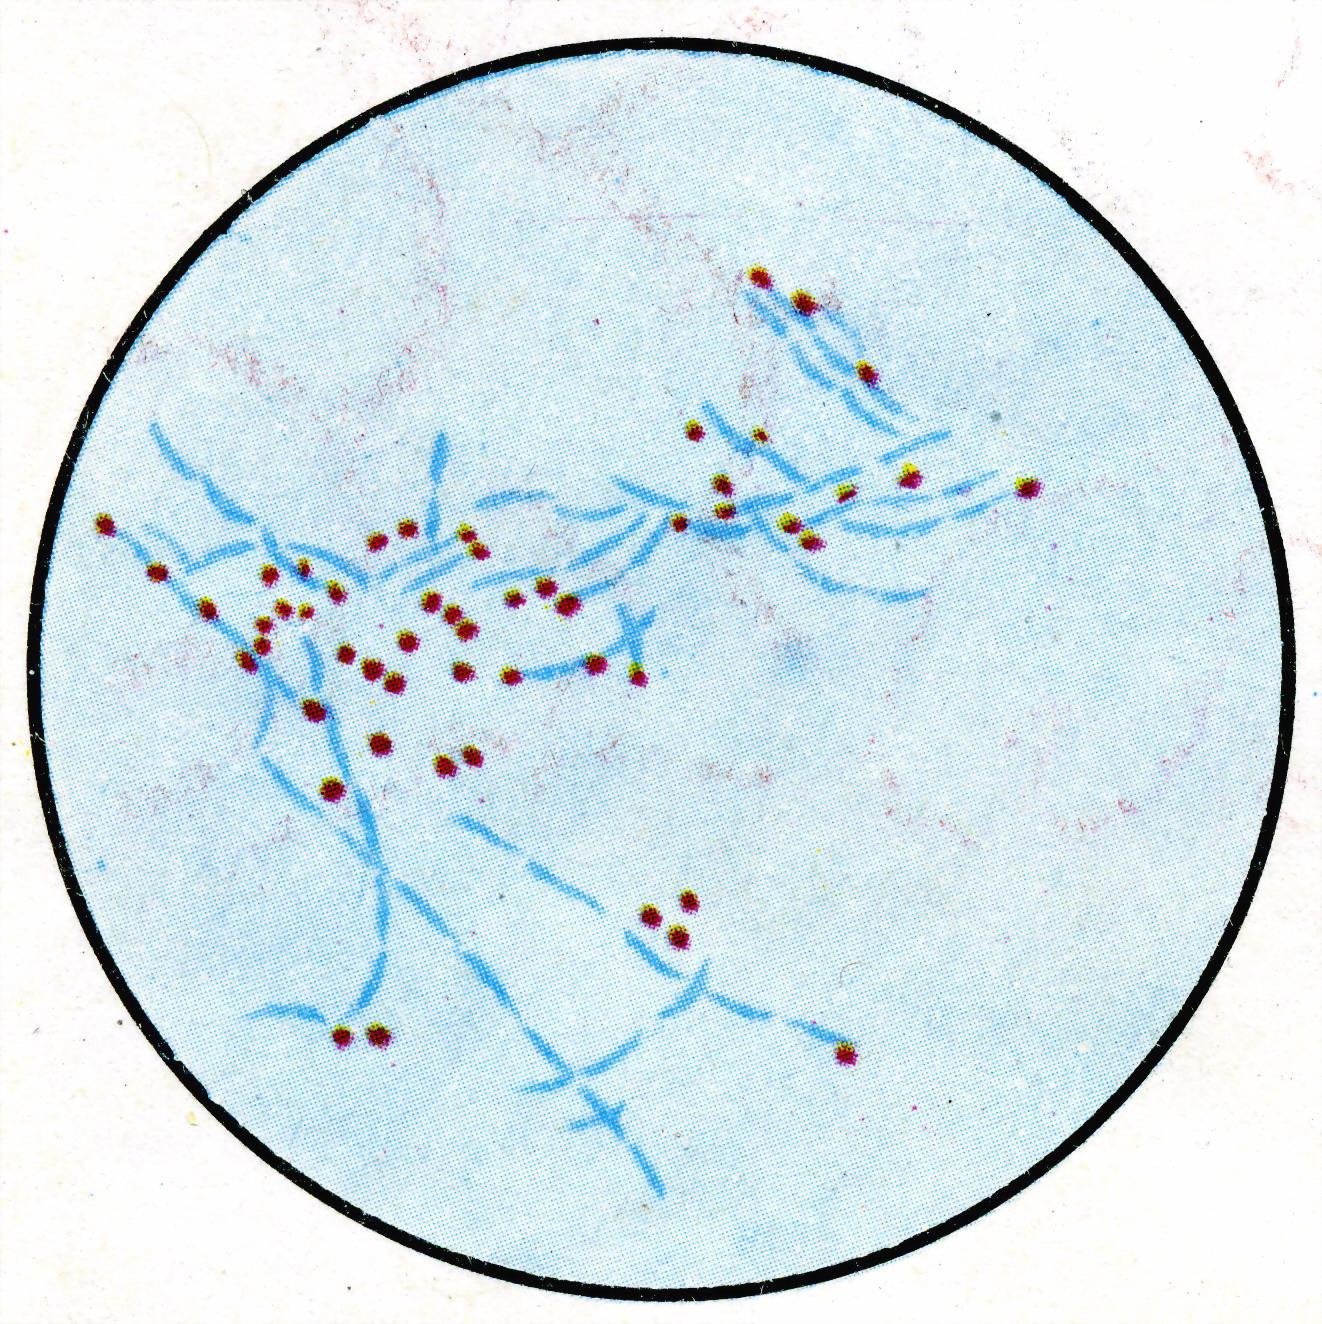 Окраска спор бактерий. Споры окраска по Ожешко. Bacillus subtilis окраска по Ожешко. Bacillus anthracis окраска по Ожешко. Сибирская язва окраска по Ожешко.